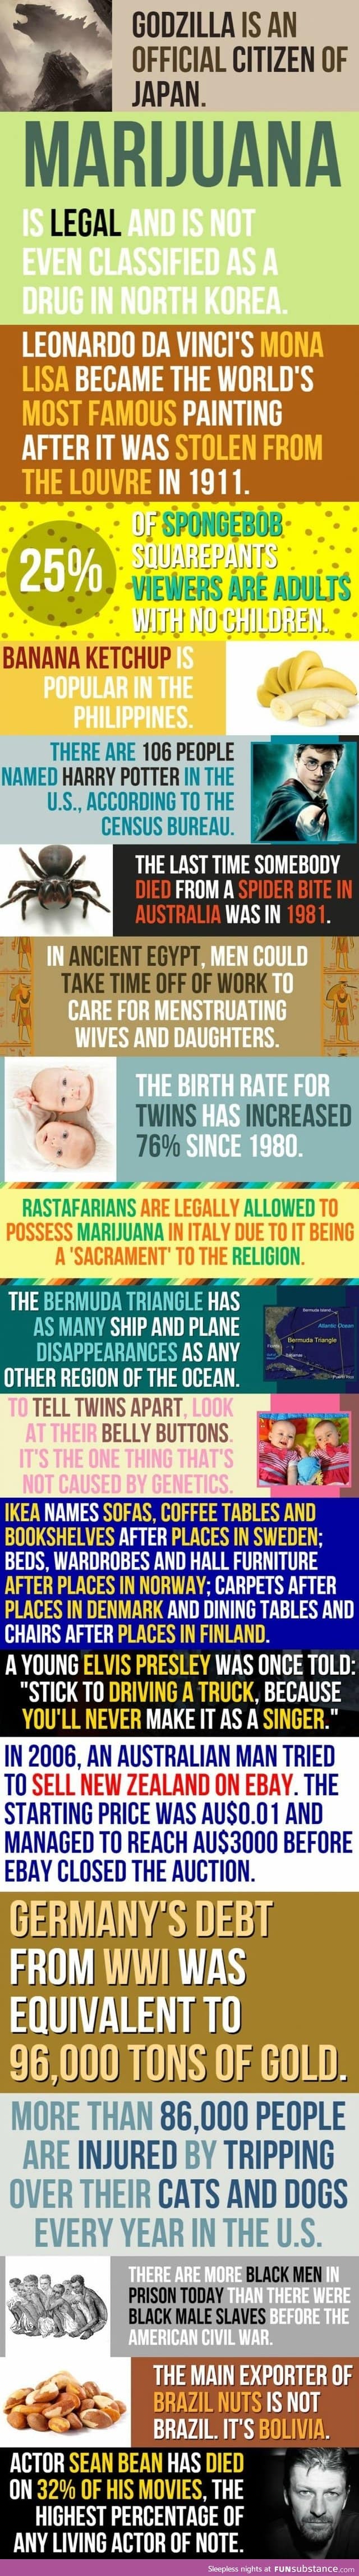 Some interesting random facts